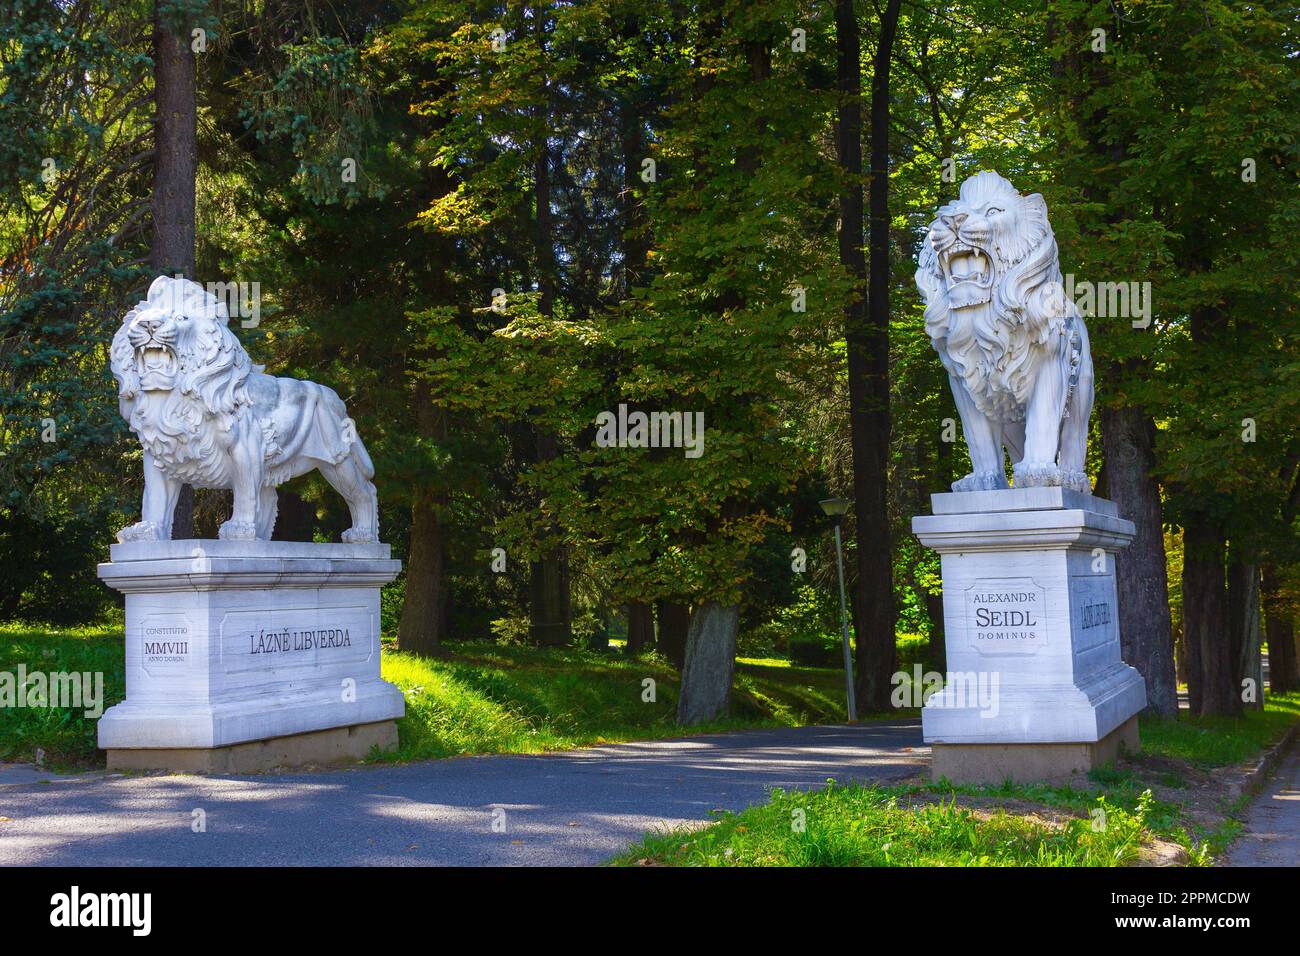 Lion statues in Lazne Libverda Czechia Stock Photo